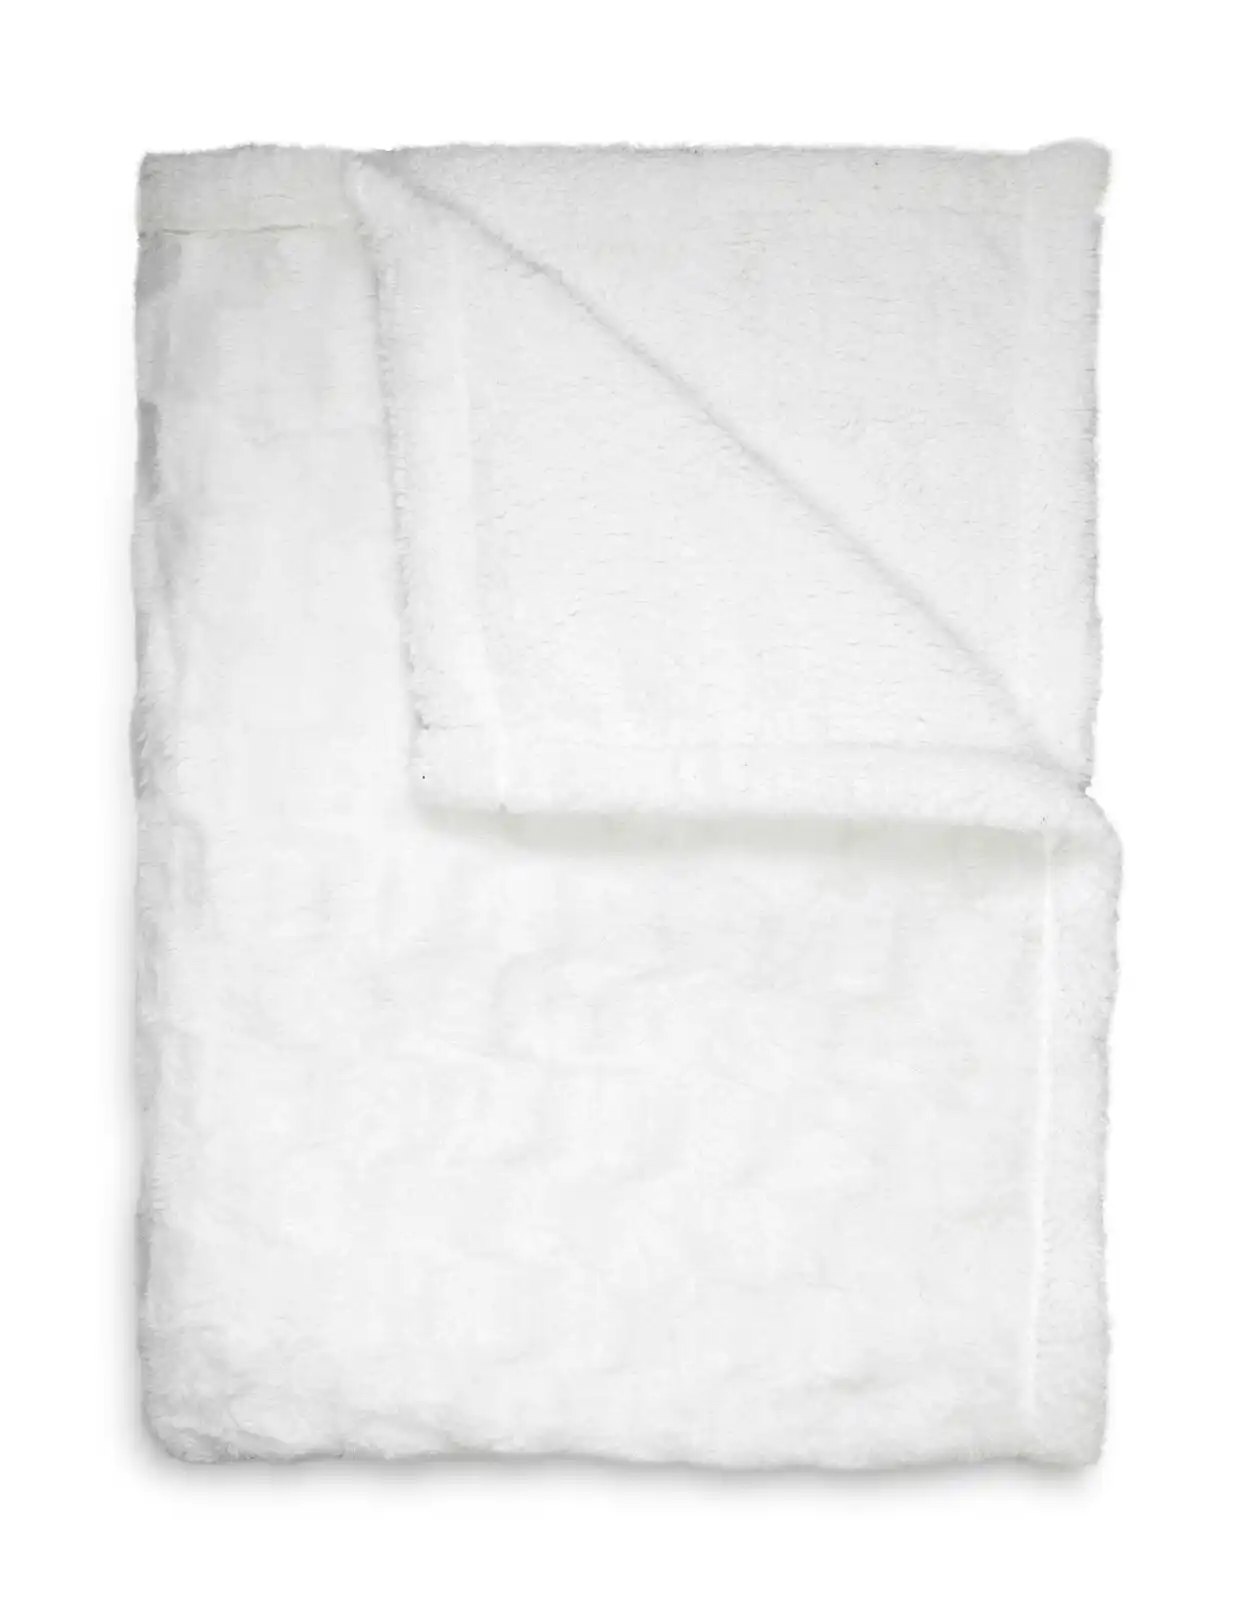 Ardor Seattle 130x180cm Hooded Blanket Adult Soft Snuggle Faux Fur Throw Snow